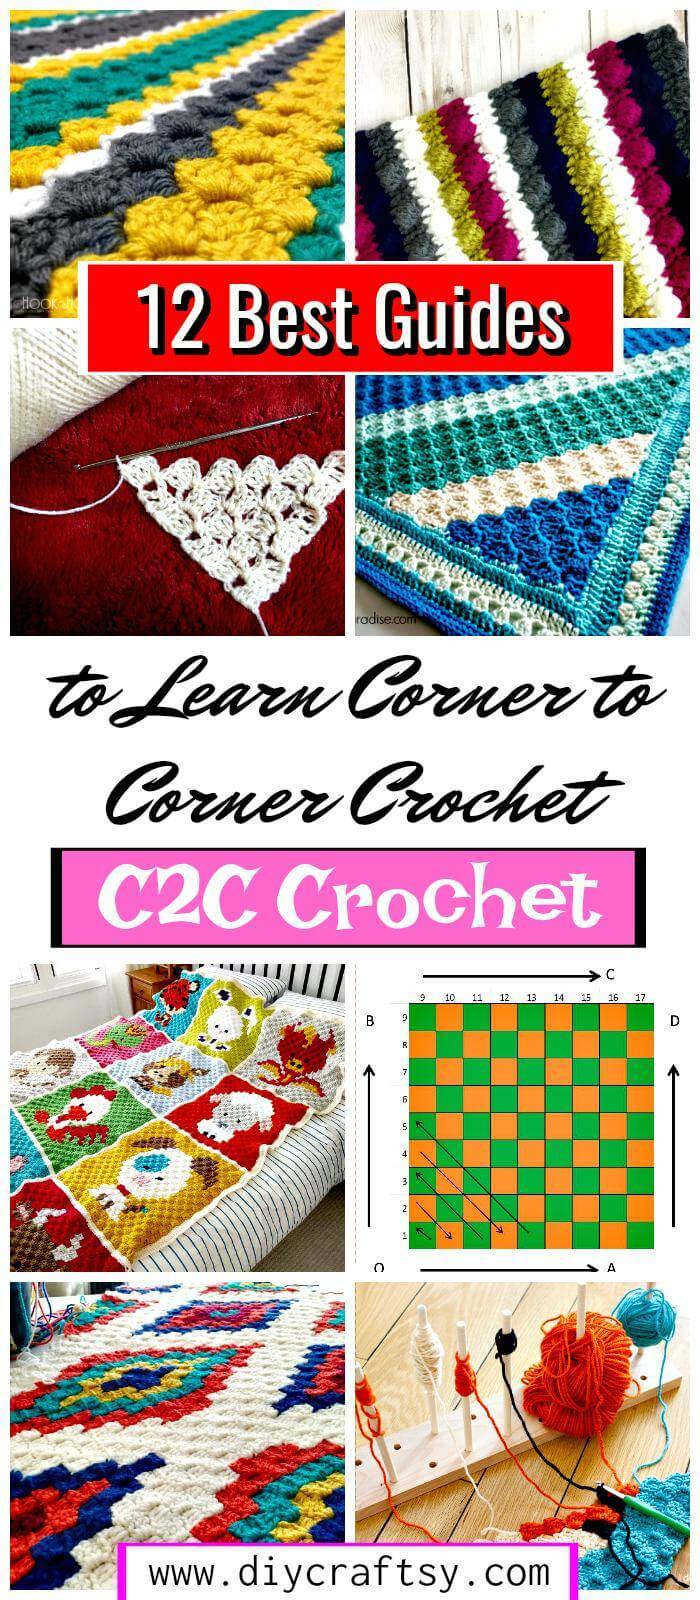 12 Best Guides to Learn Corner to Corner Crochet or C2C Crochet - Free Crochet Patterns